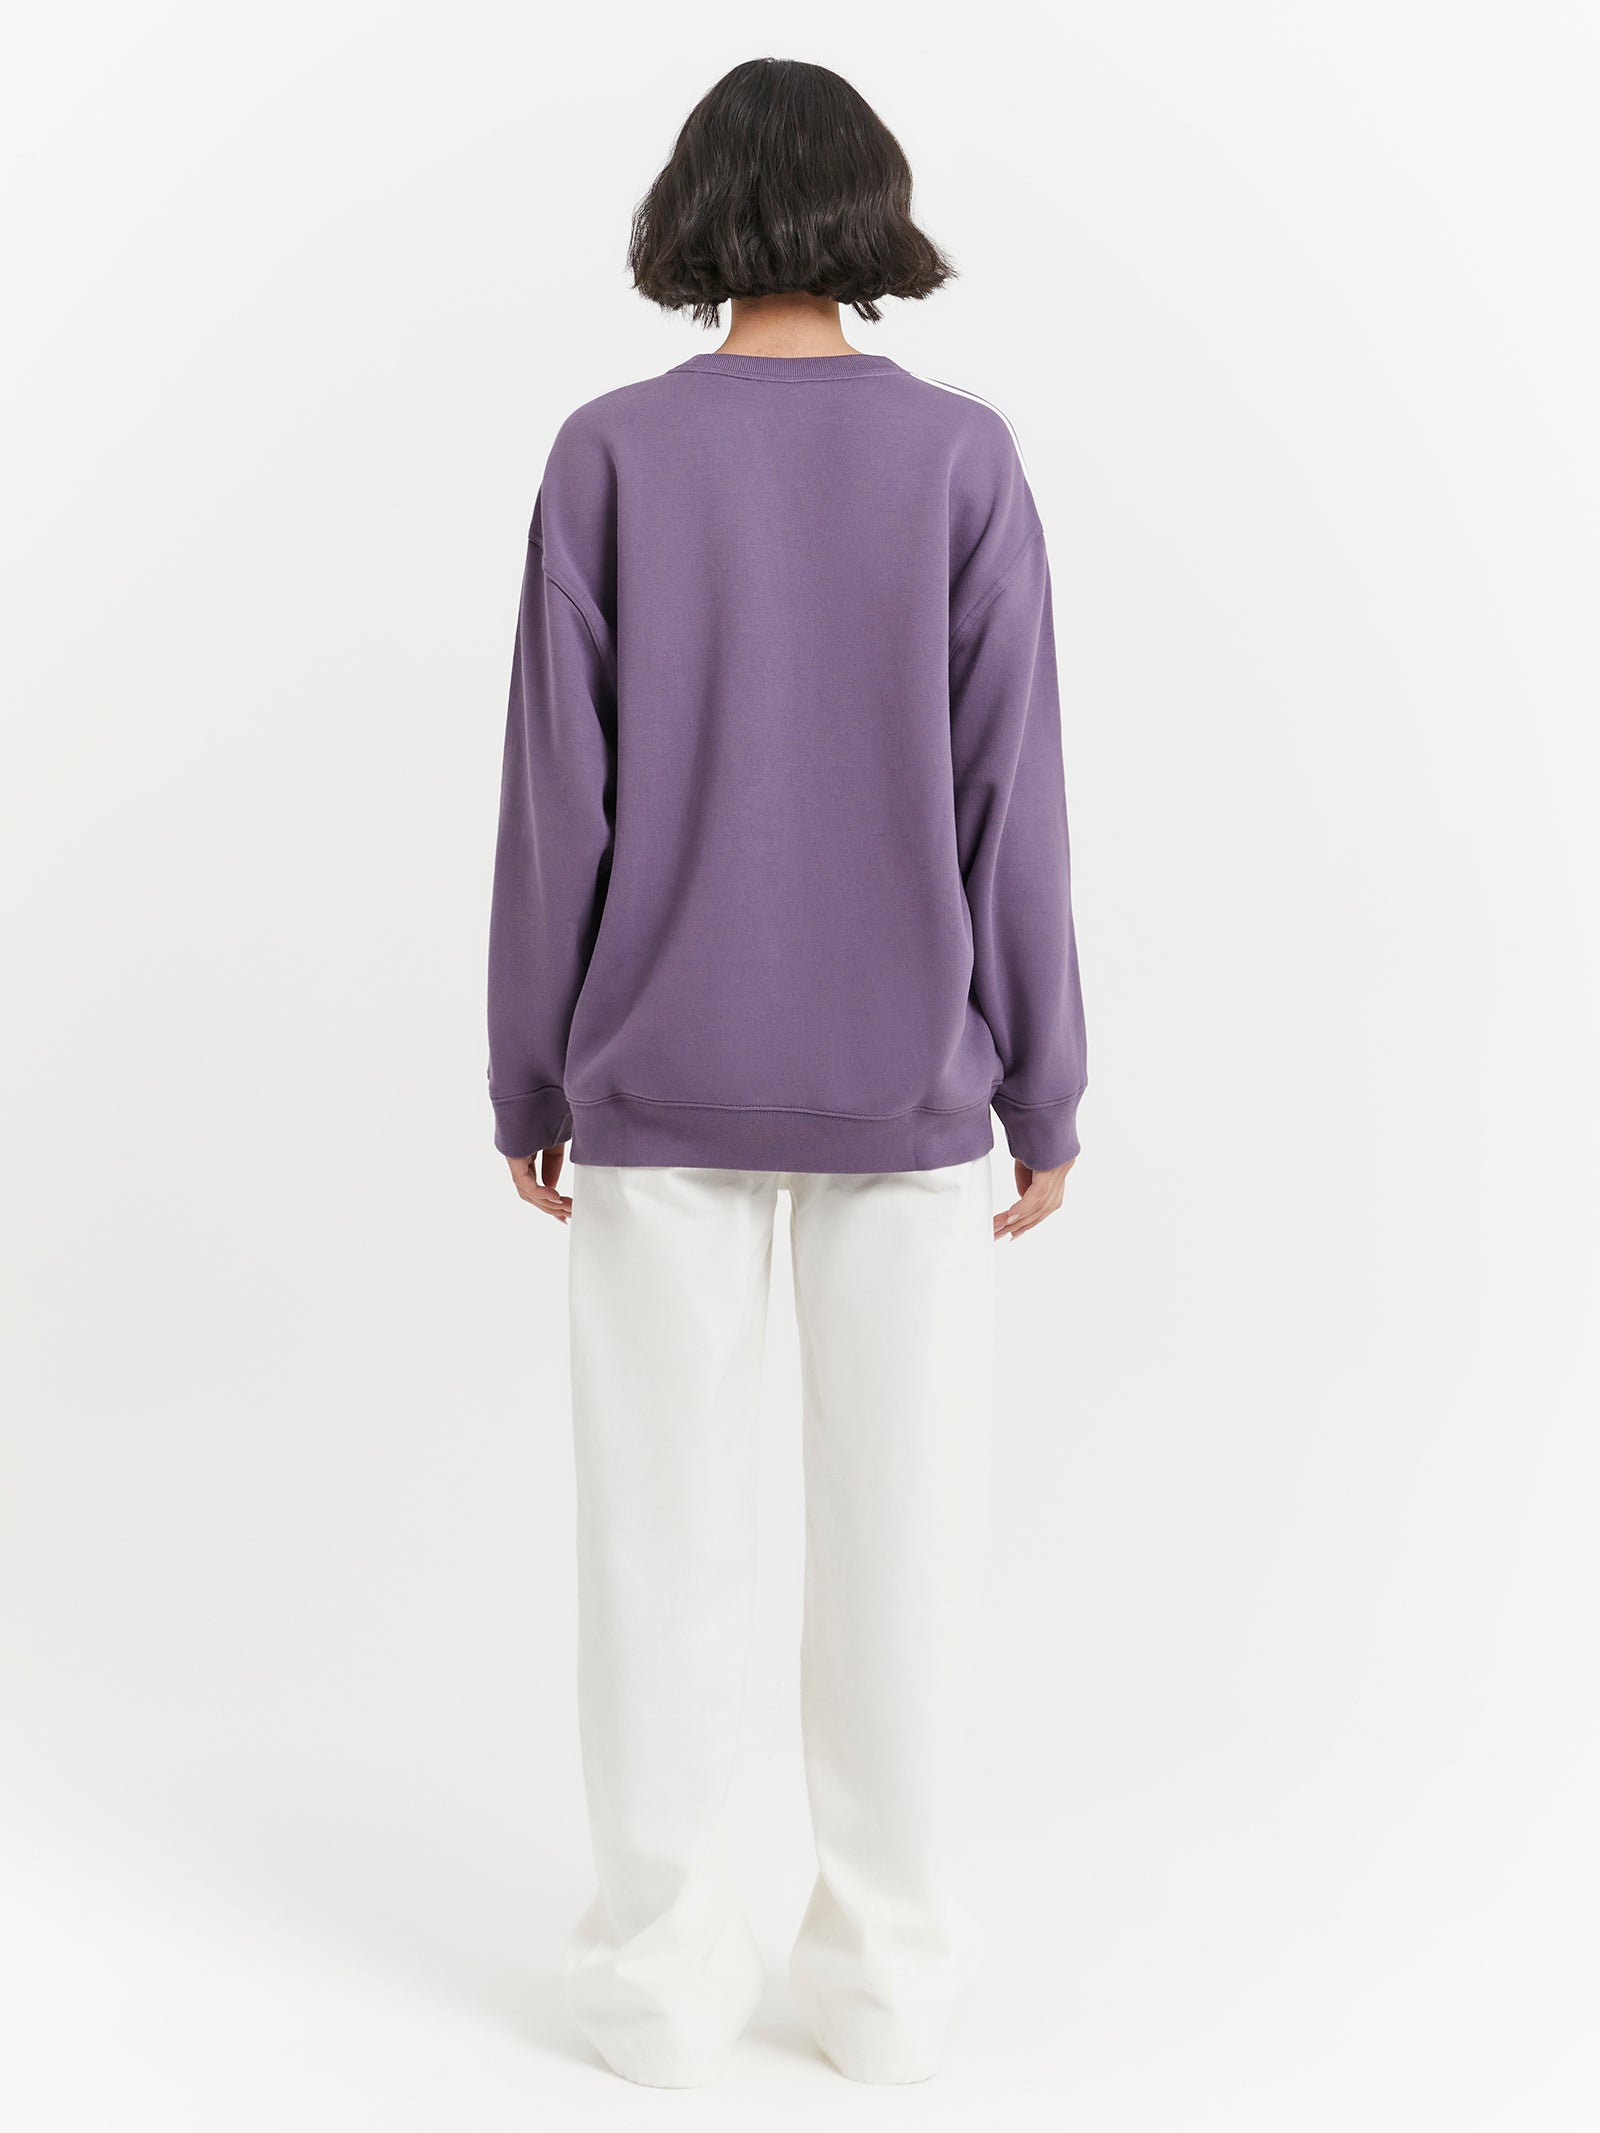 Essentials Oversized Sweatshirt in Shadow Violet